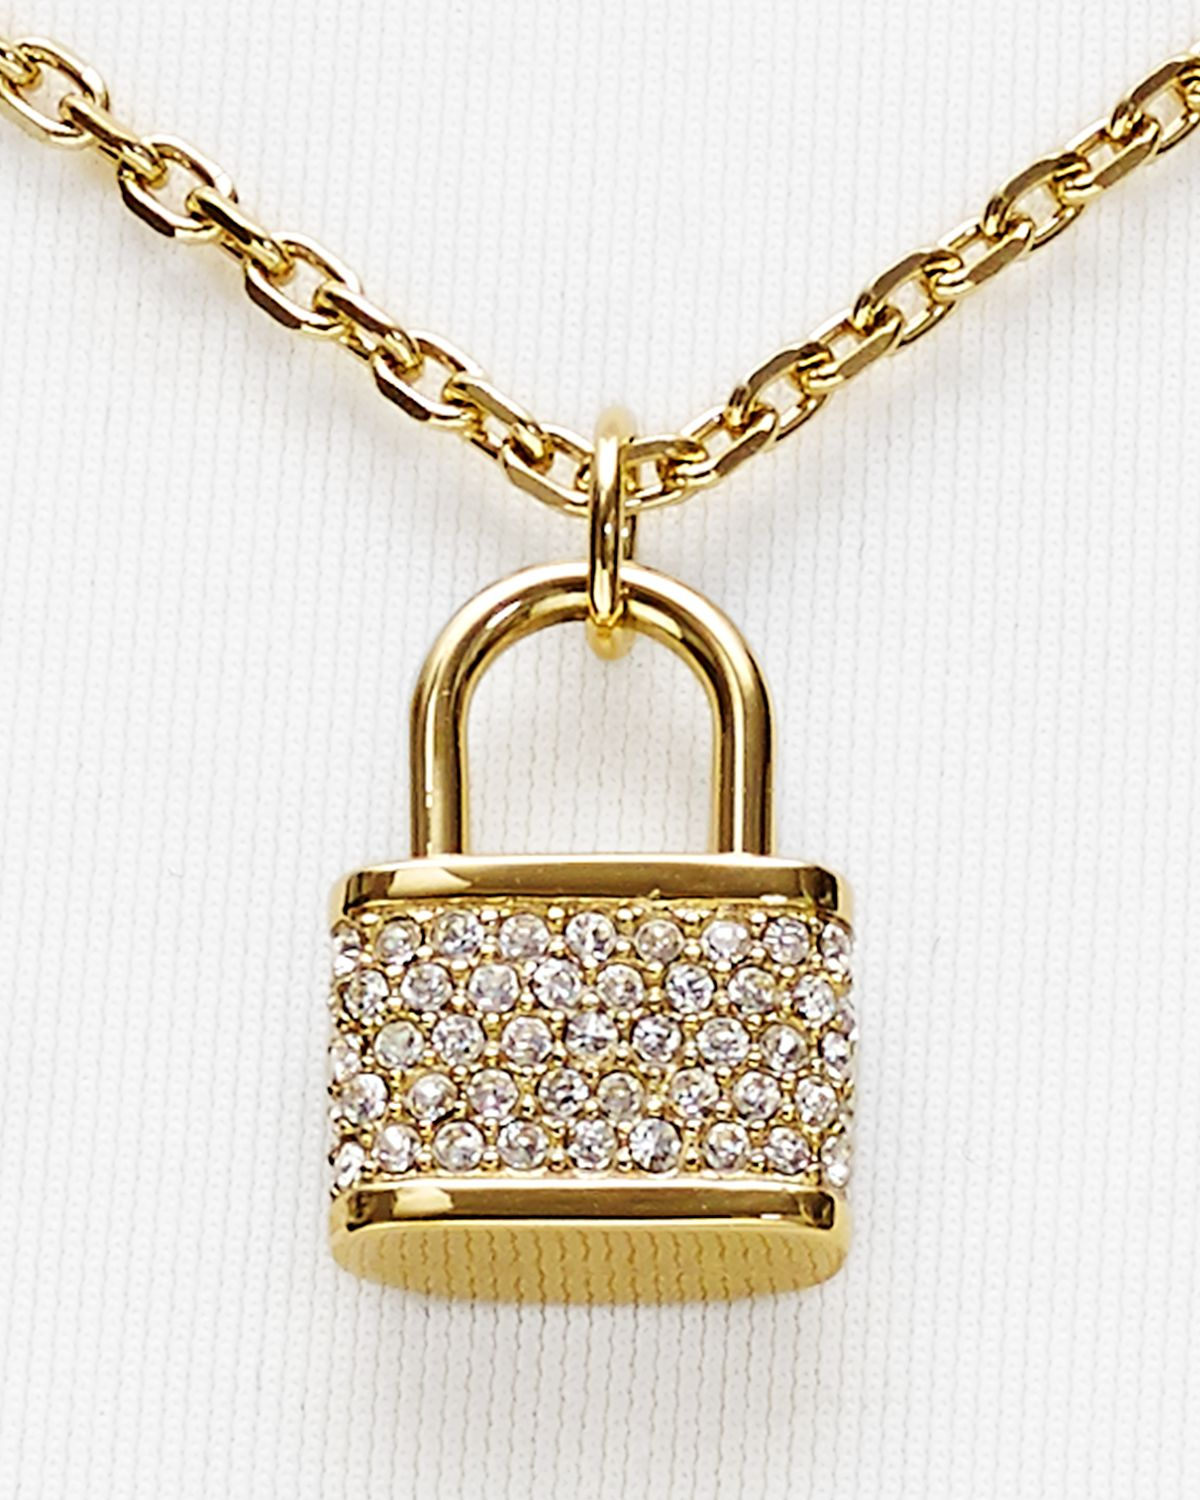 ROSE GOLD PADLOCK NECKLACE - JEWELLERY from Market Cross Jewellers UK